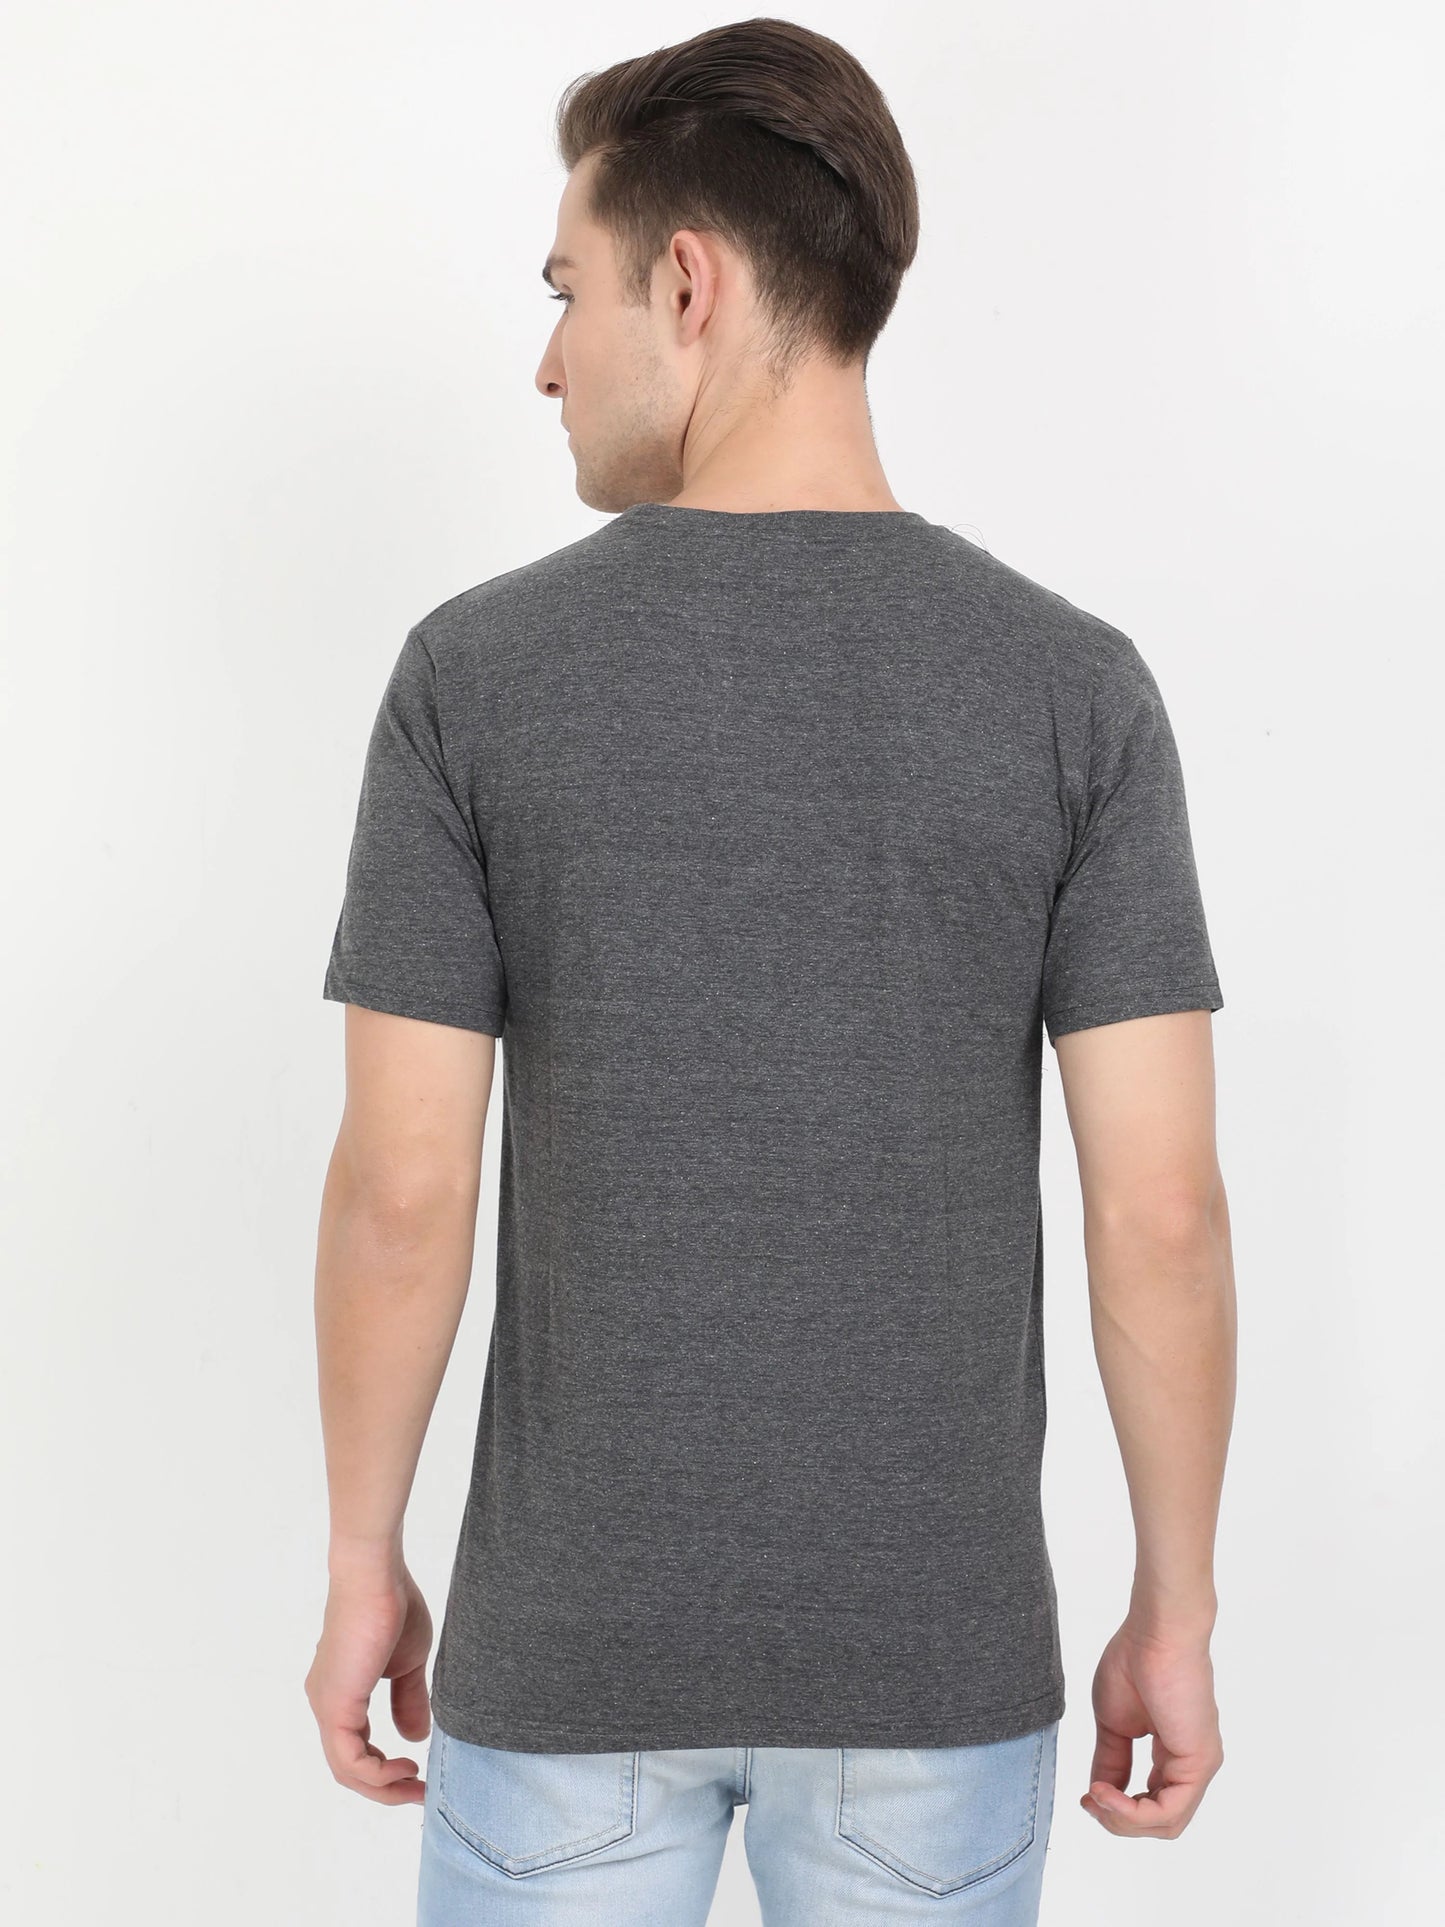 Fleximaa Men's Cotton Plain Round Neck Half Sleeve T-Shirt - fleximaa-so